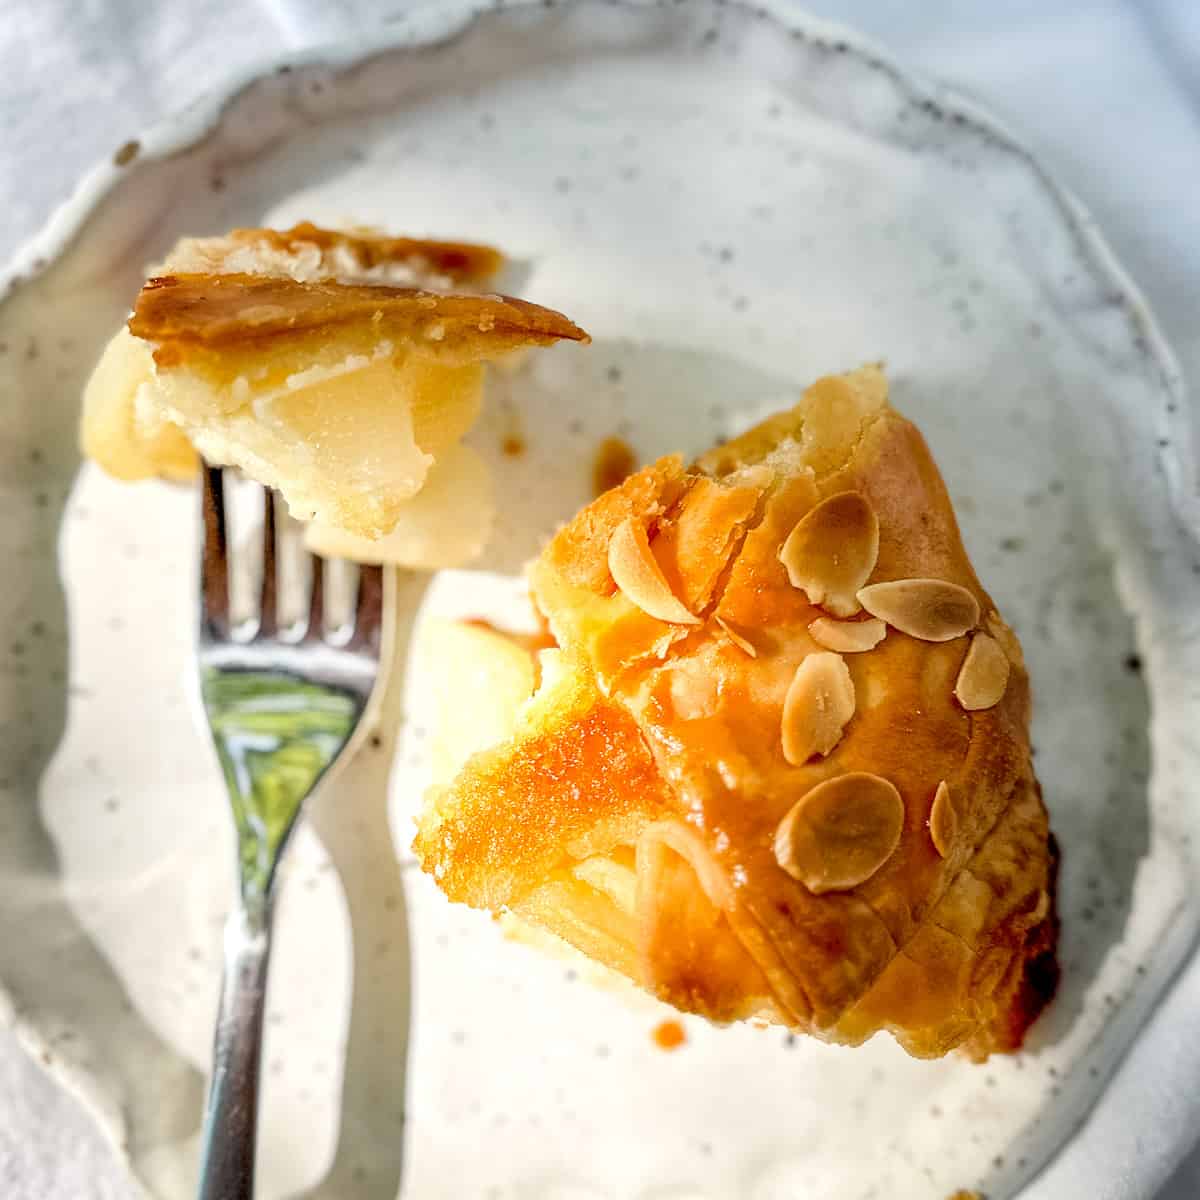 A slice of pear frangipane galette.